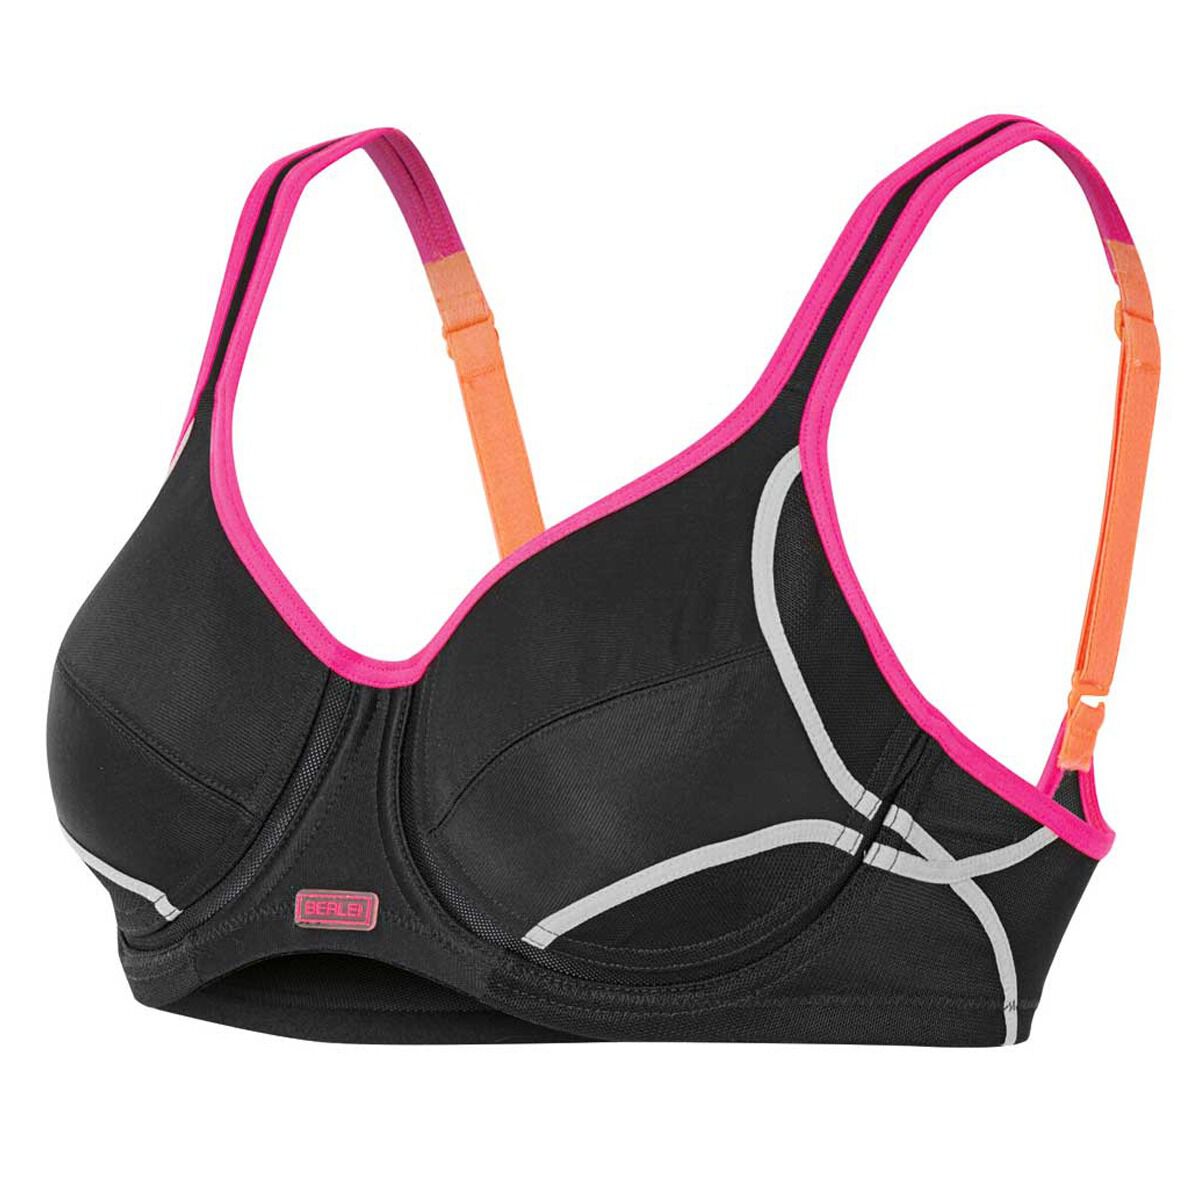 2 x BERLEI WOMENS ELECTRIFY CROP UNDERWIR SPORTS BRA Black Pink Activewear Gym